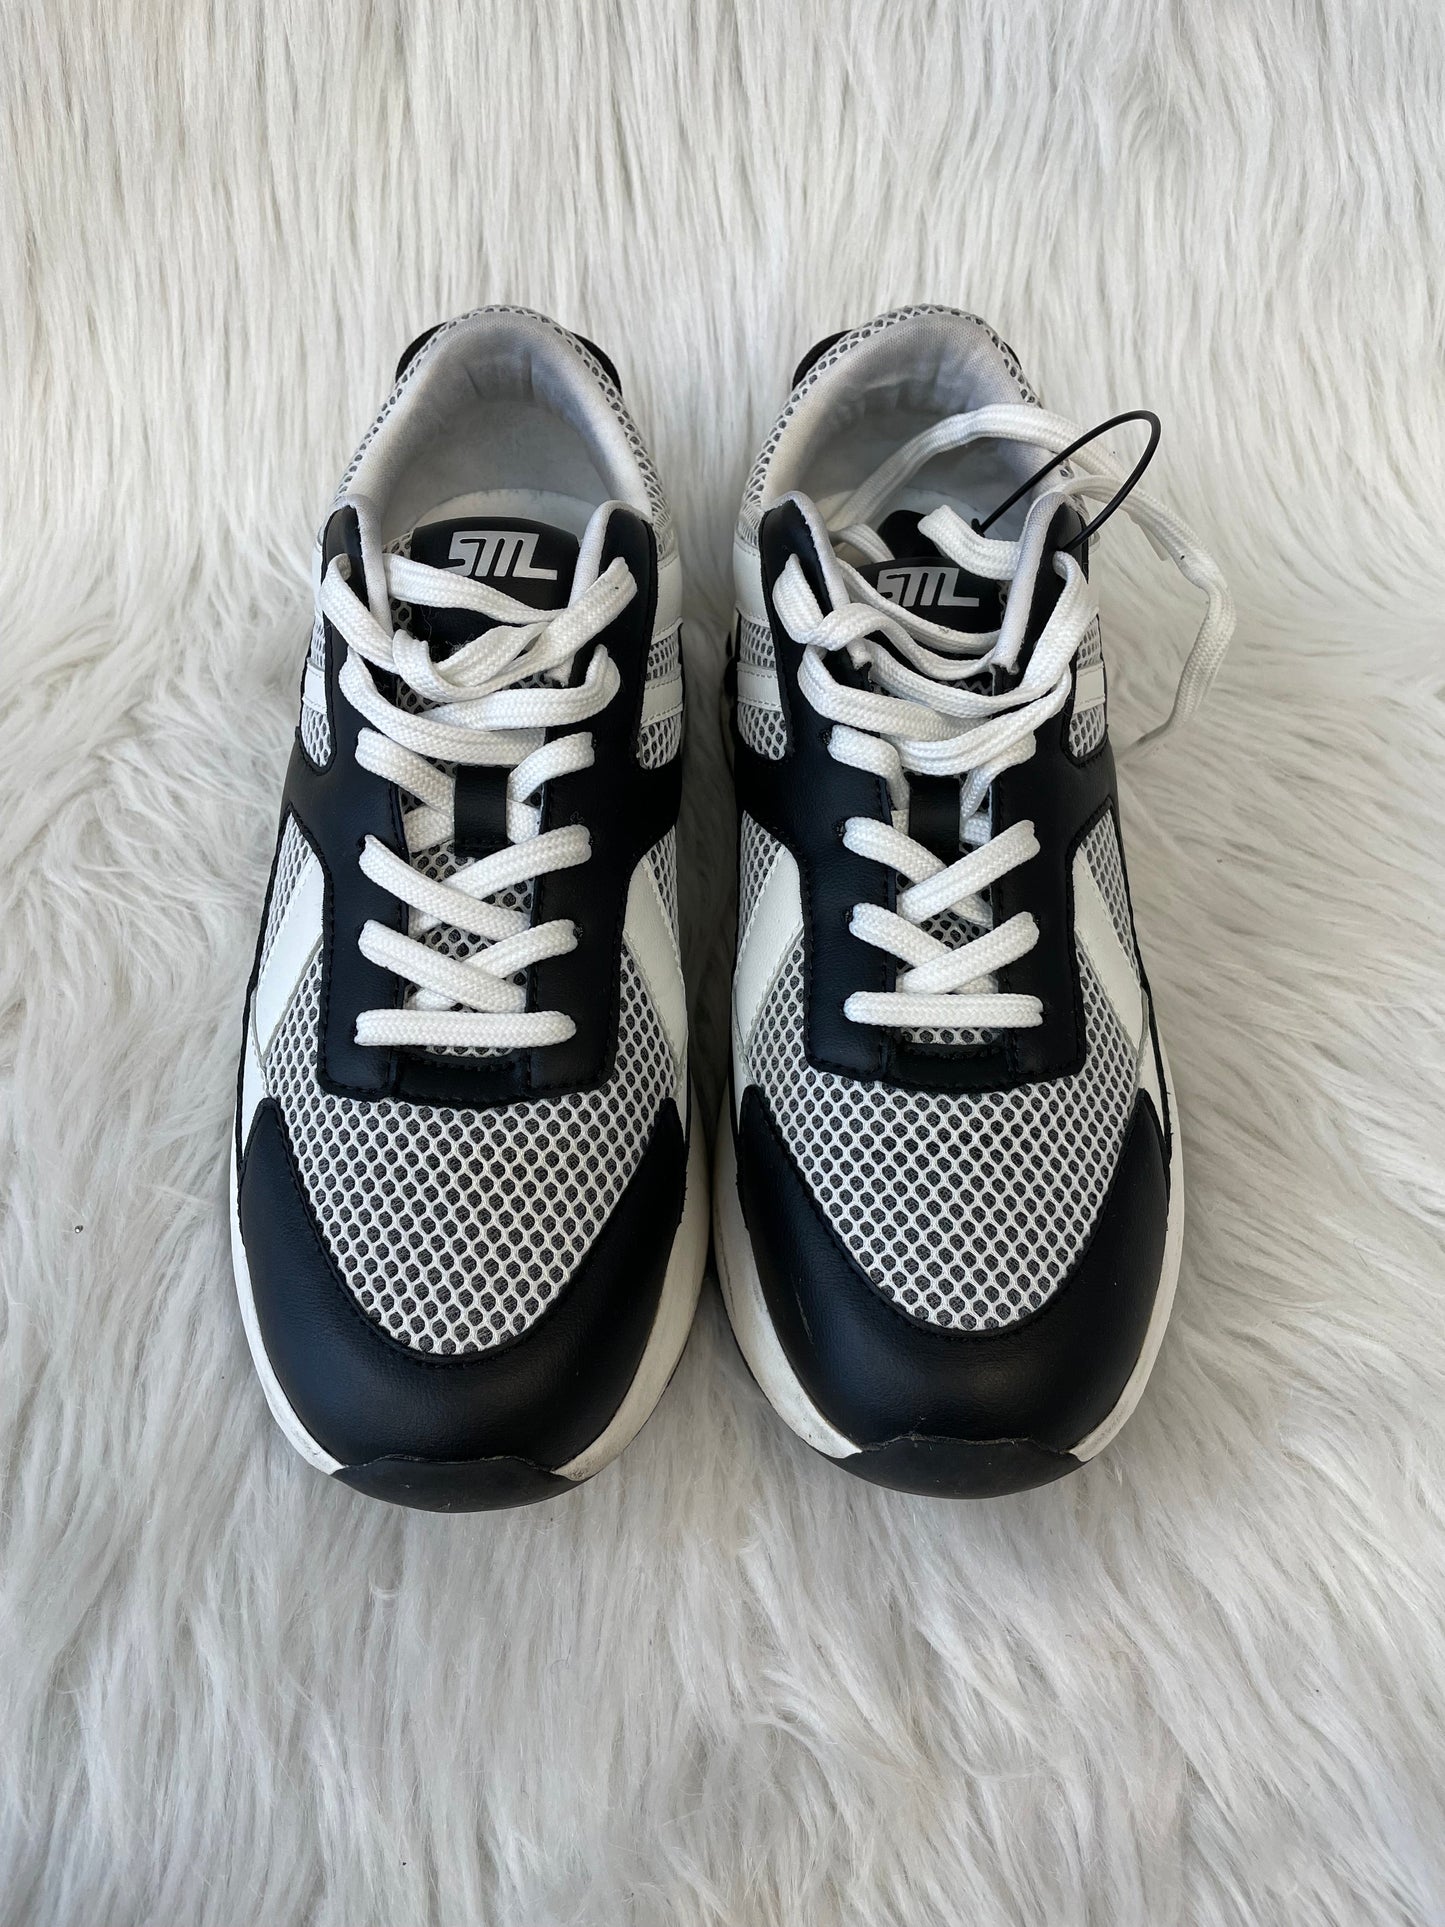 Black & White Shoes Sneakers Platform Steve Madden, Size 9.5